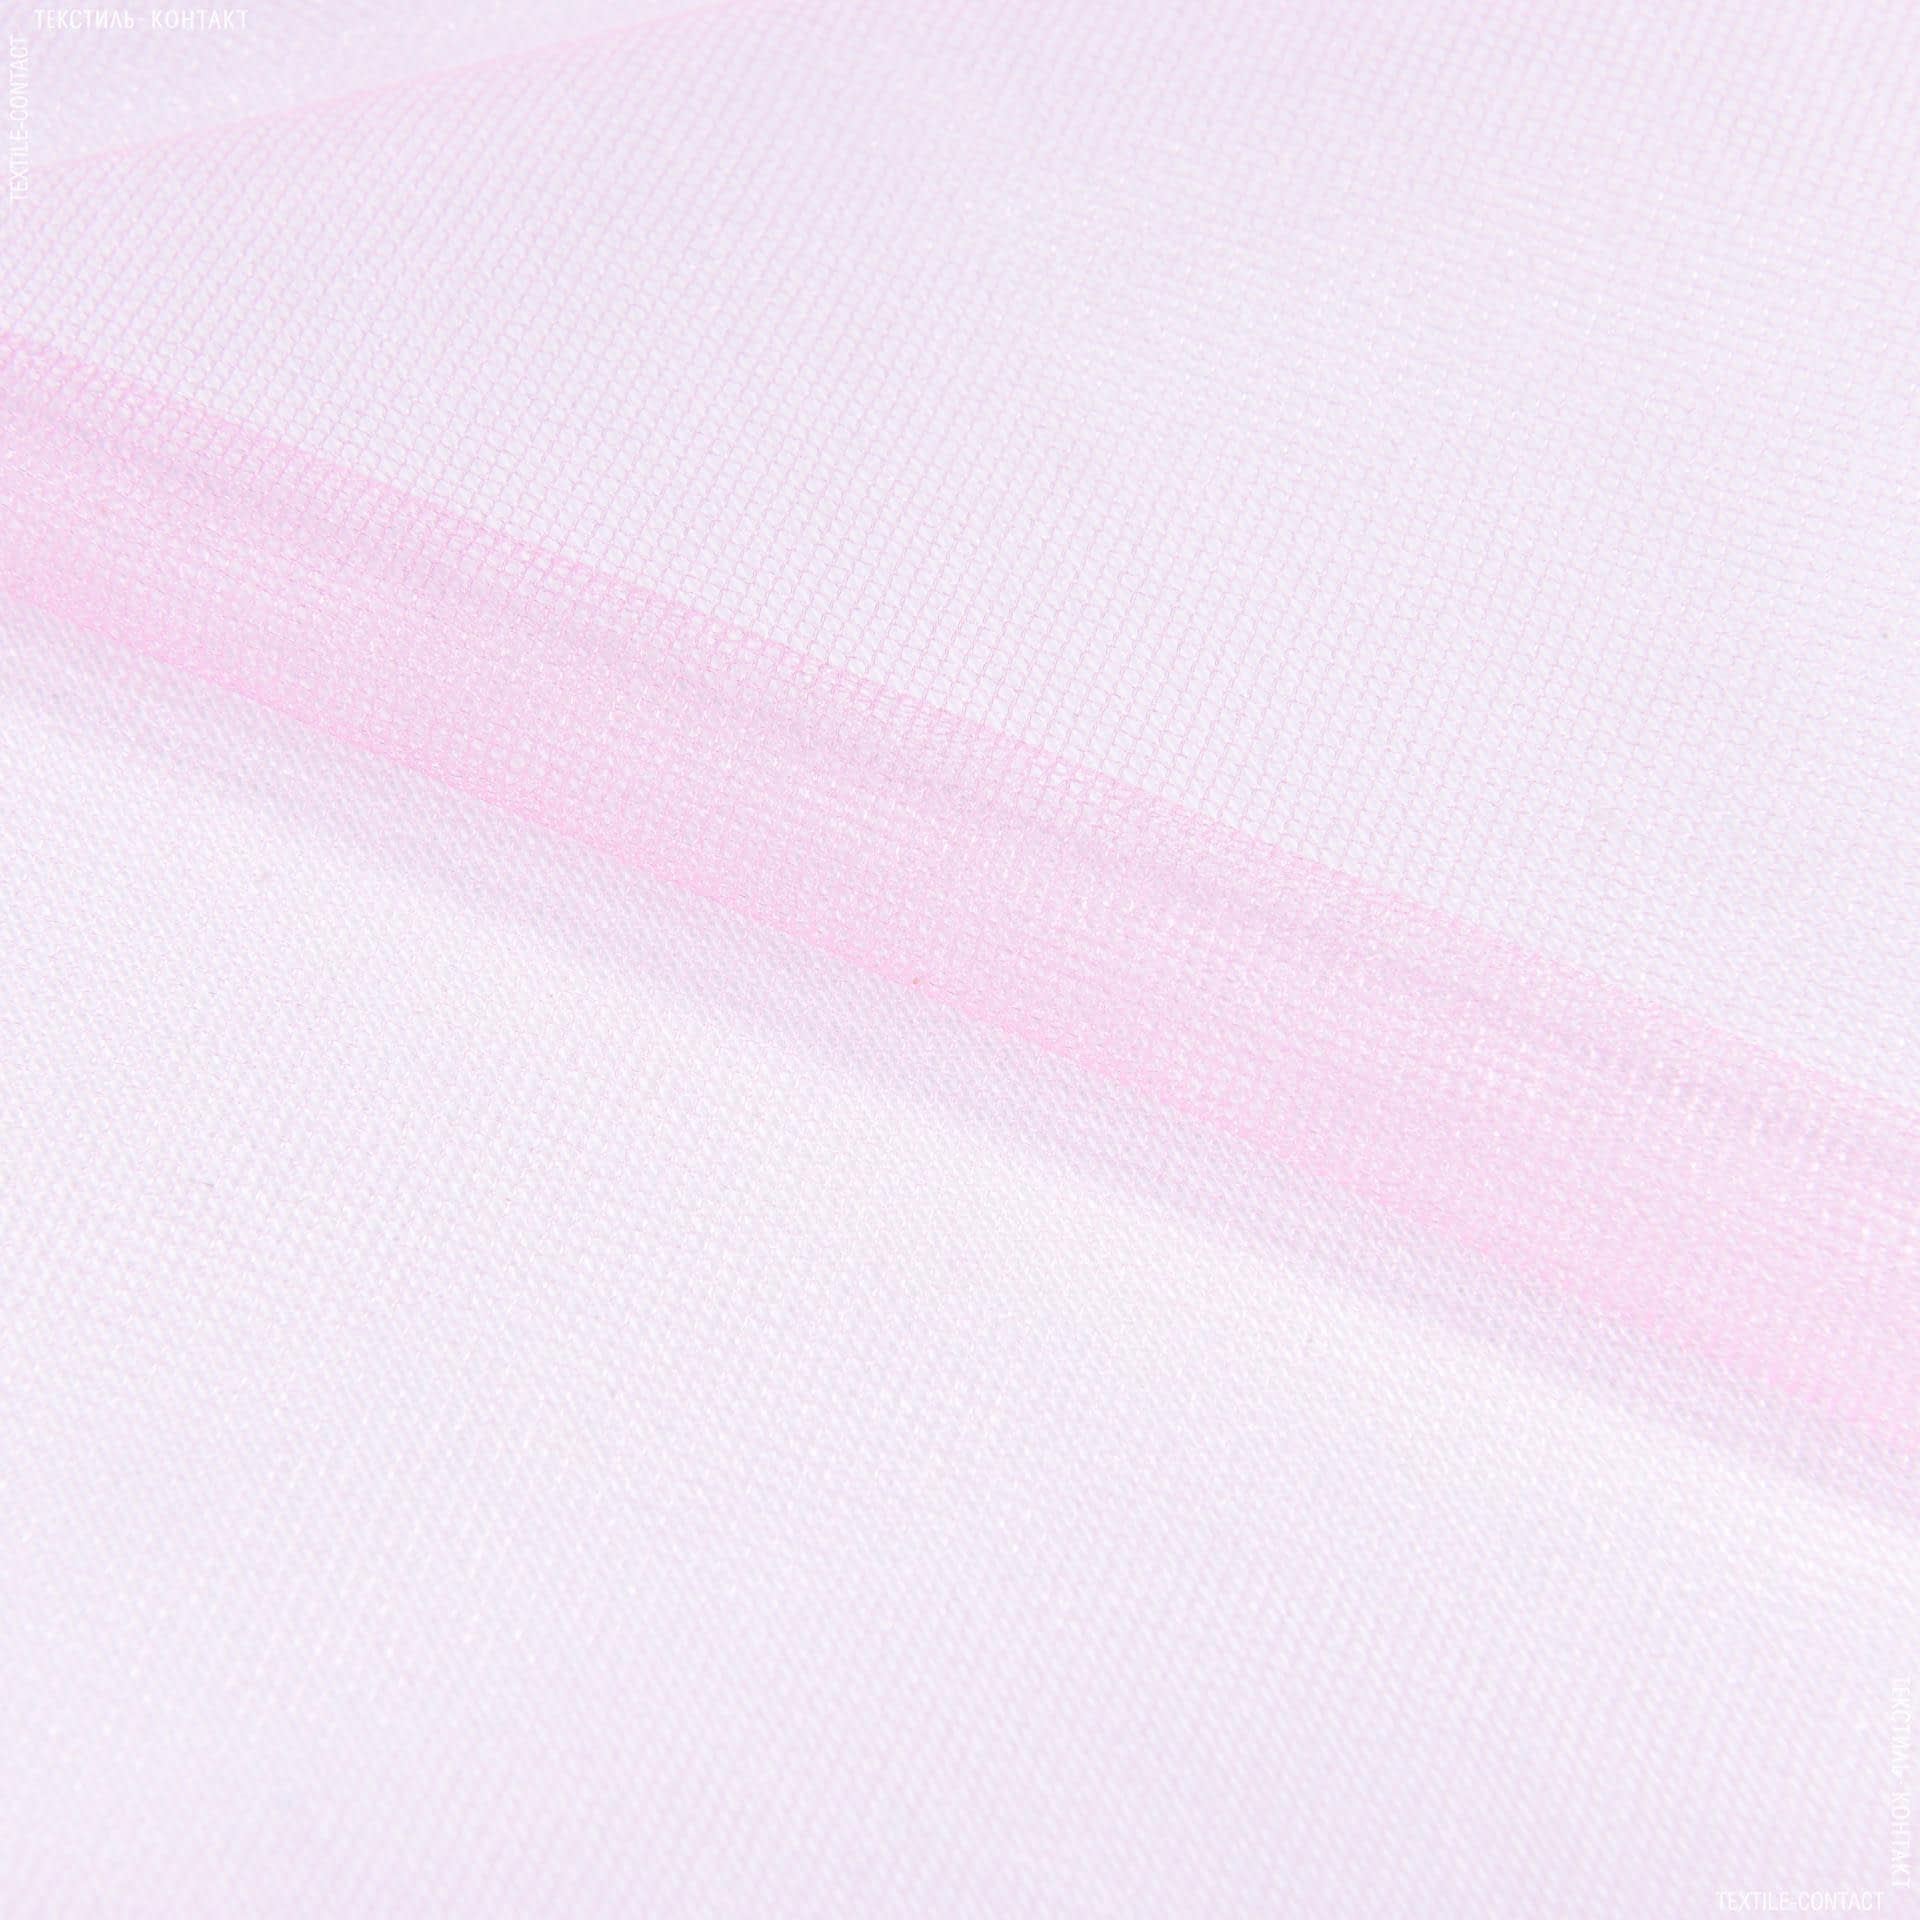 Тканини для суконь - Фатин блискучий рожевий